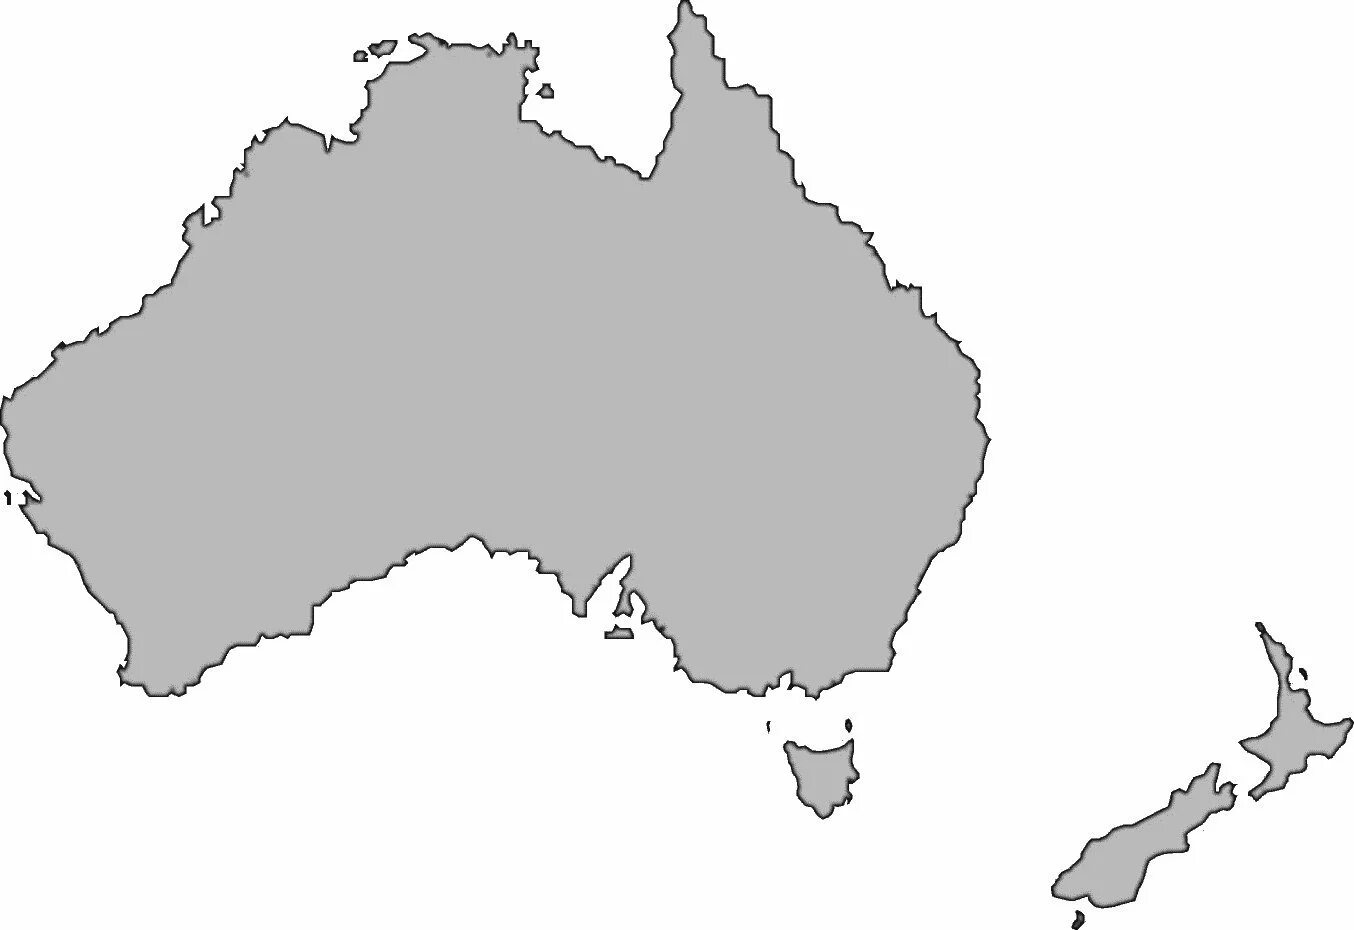 Австралия геоконтур континента. Контур материка Австралия. Контуры материков Австралия. Австралия очертания материка.